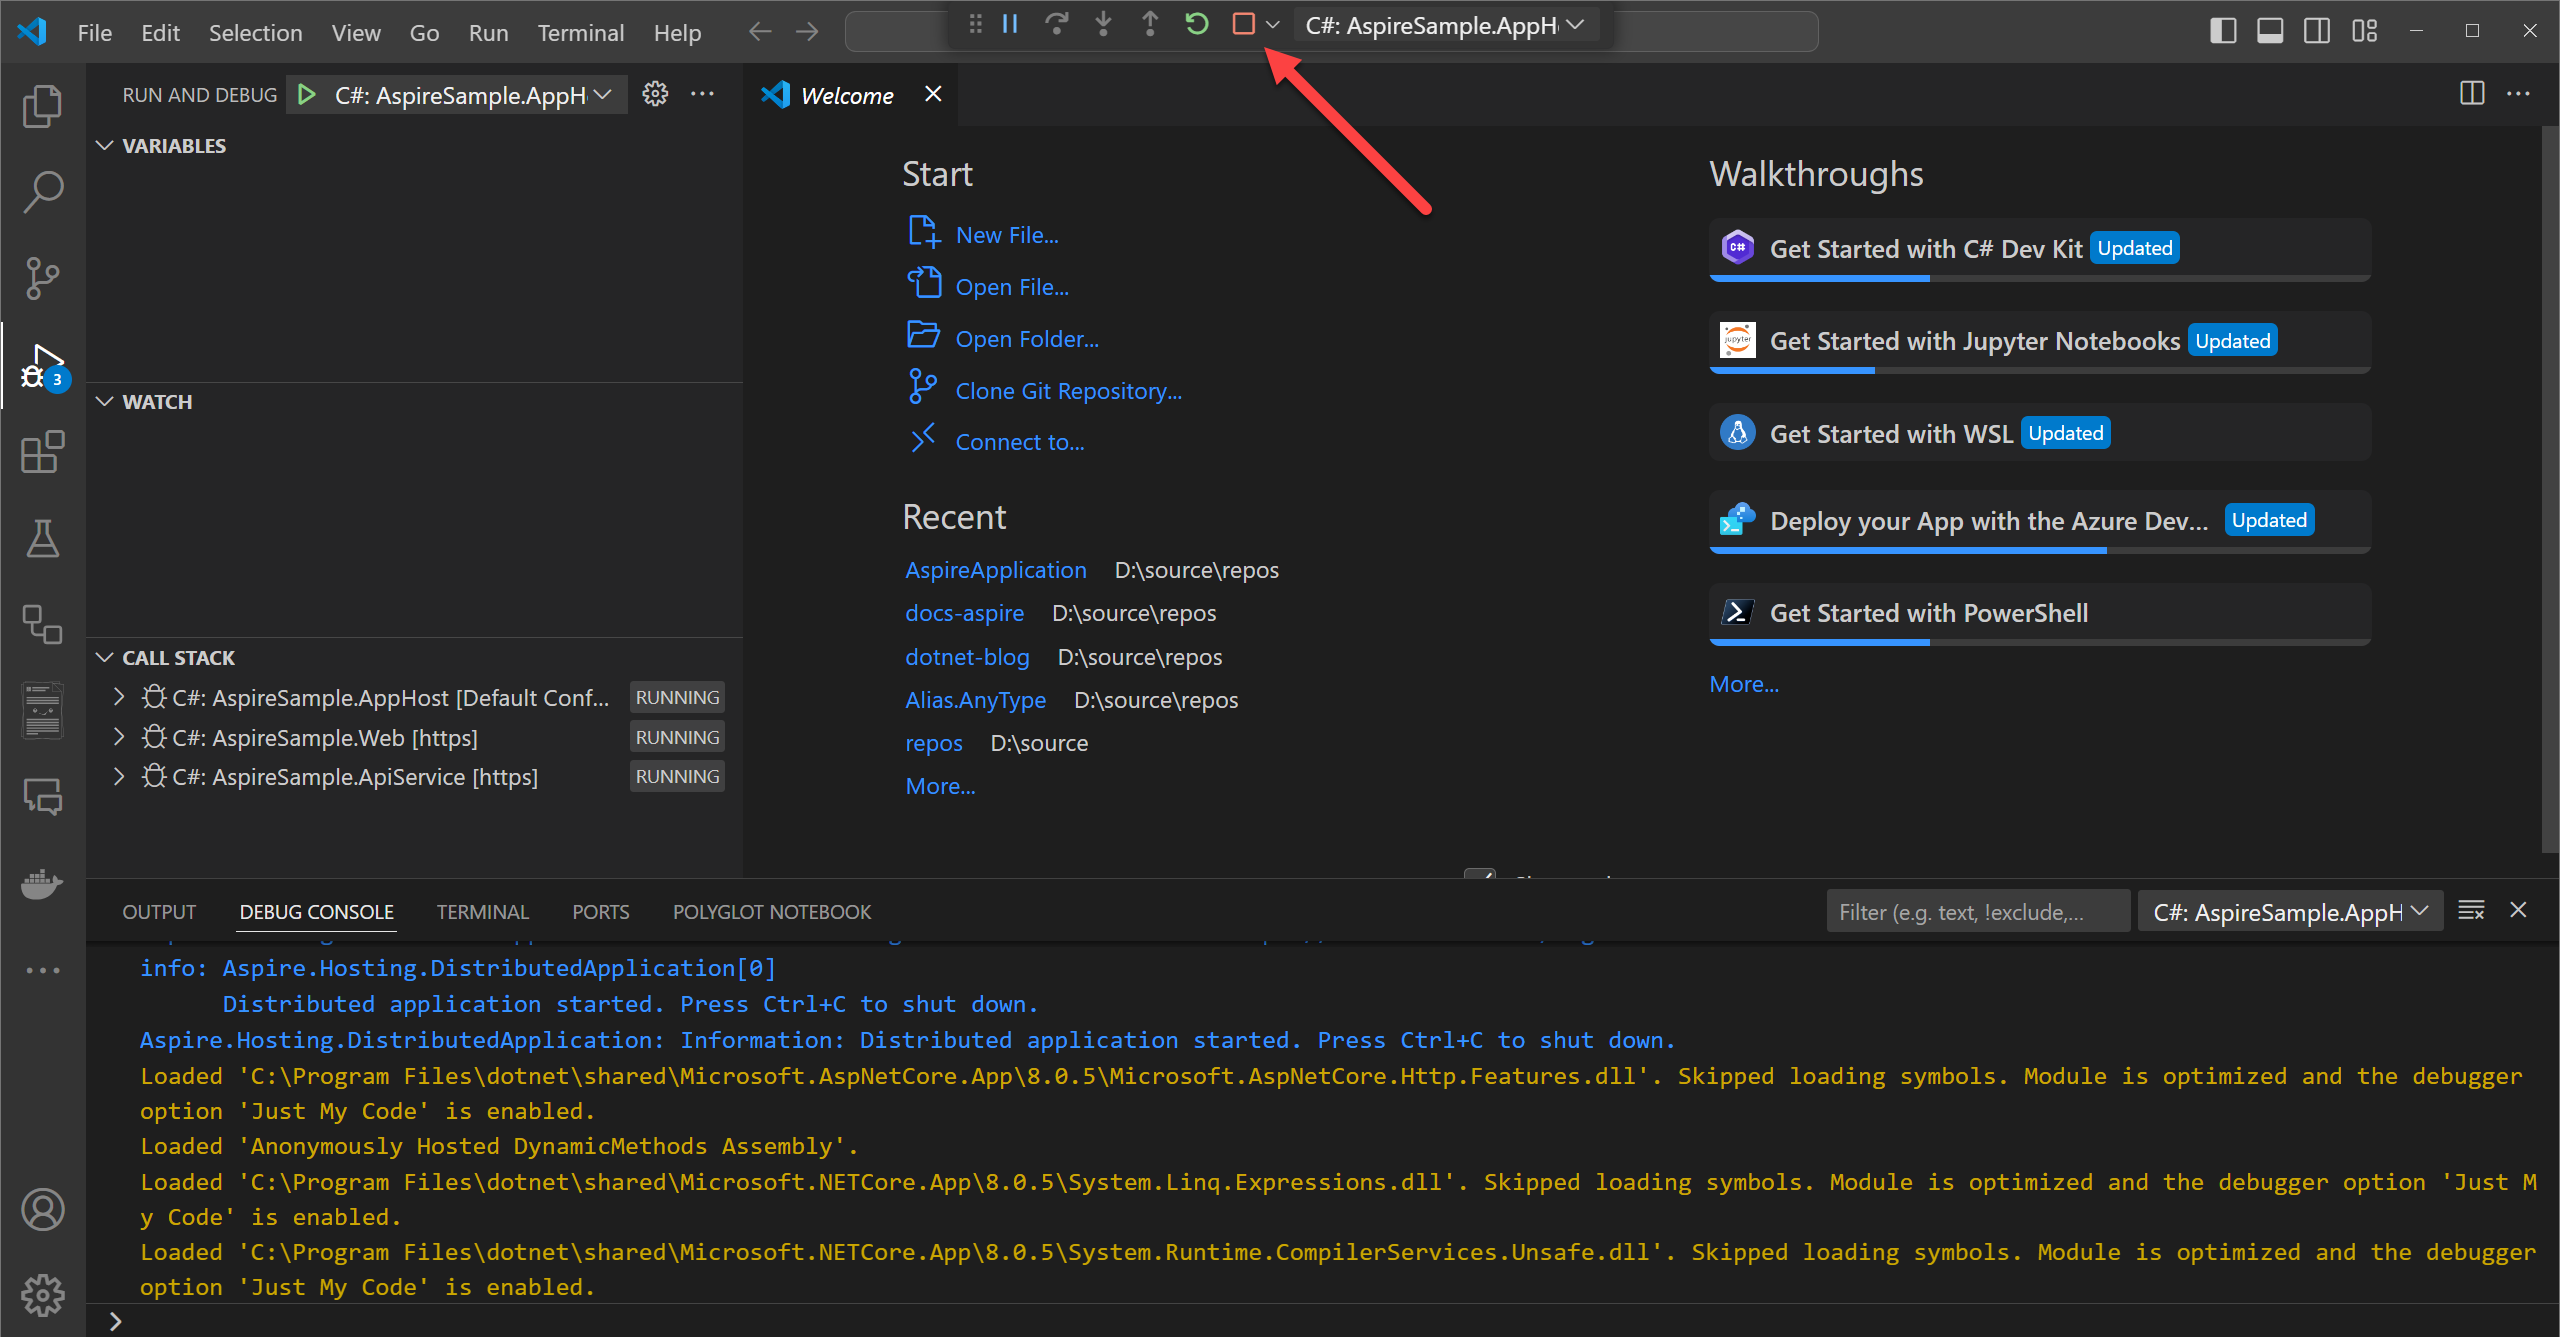 A screenshot of the Visual Studio Code stop button.